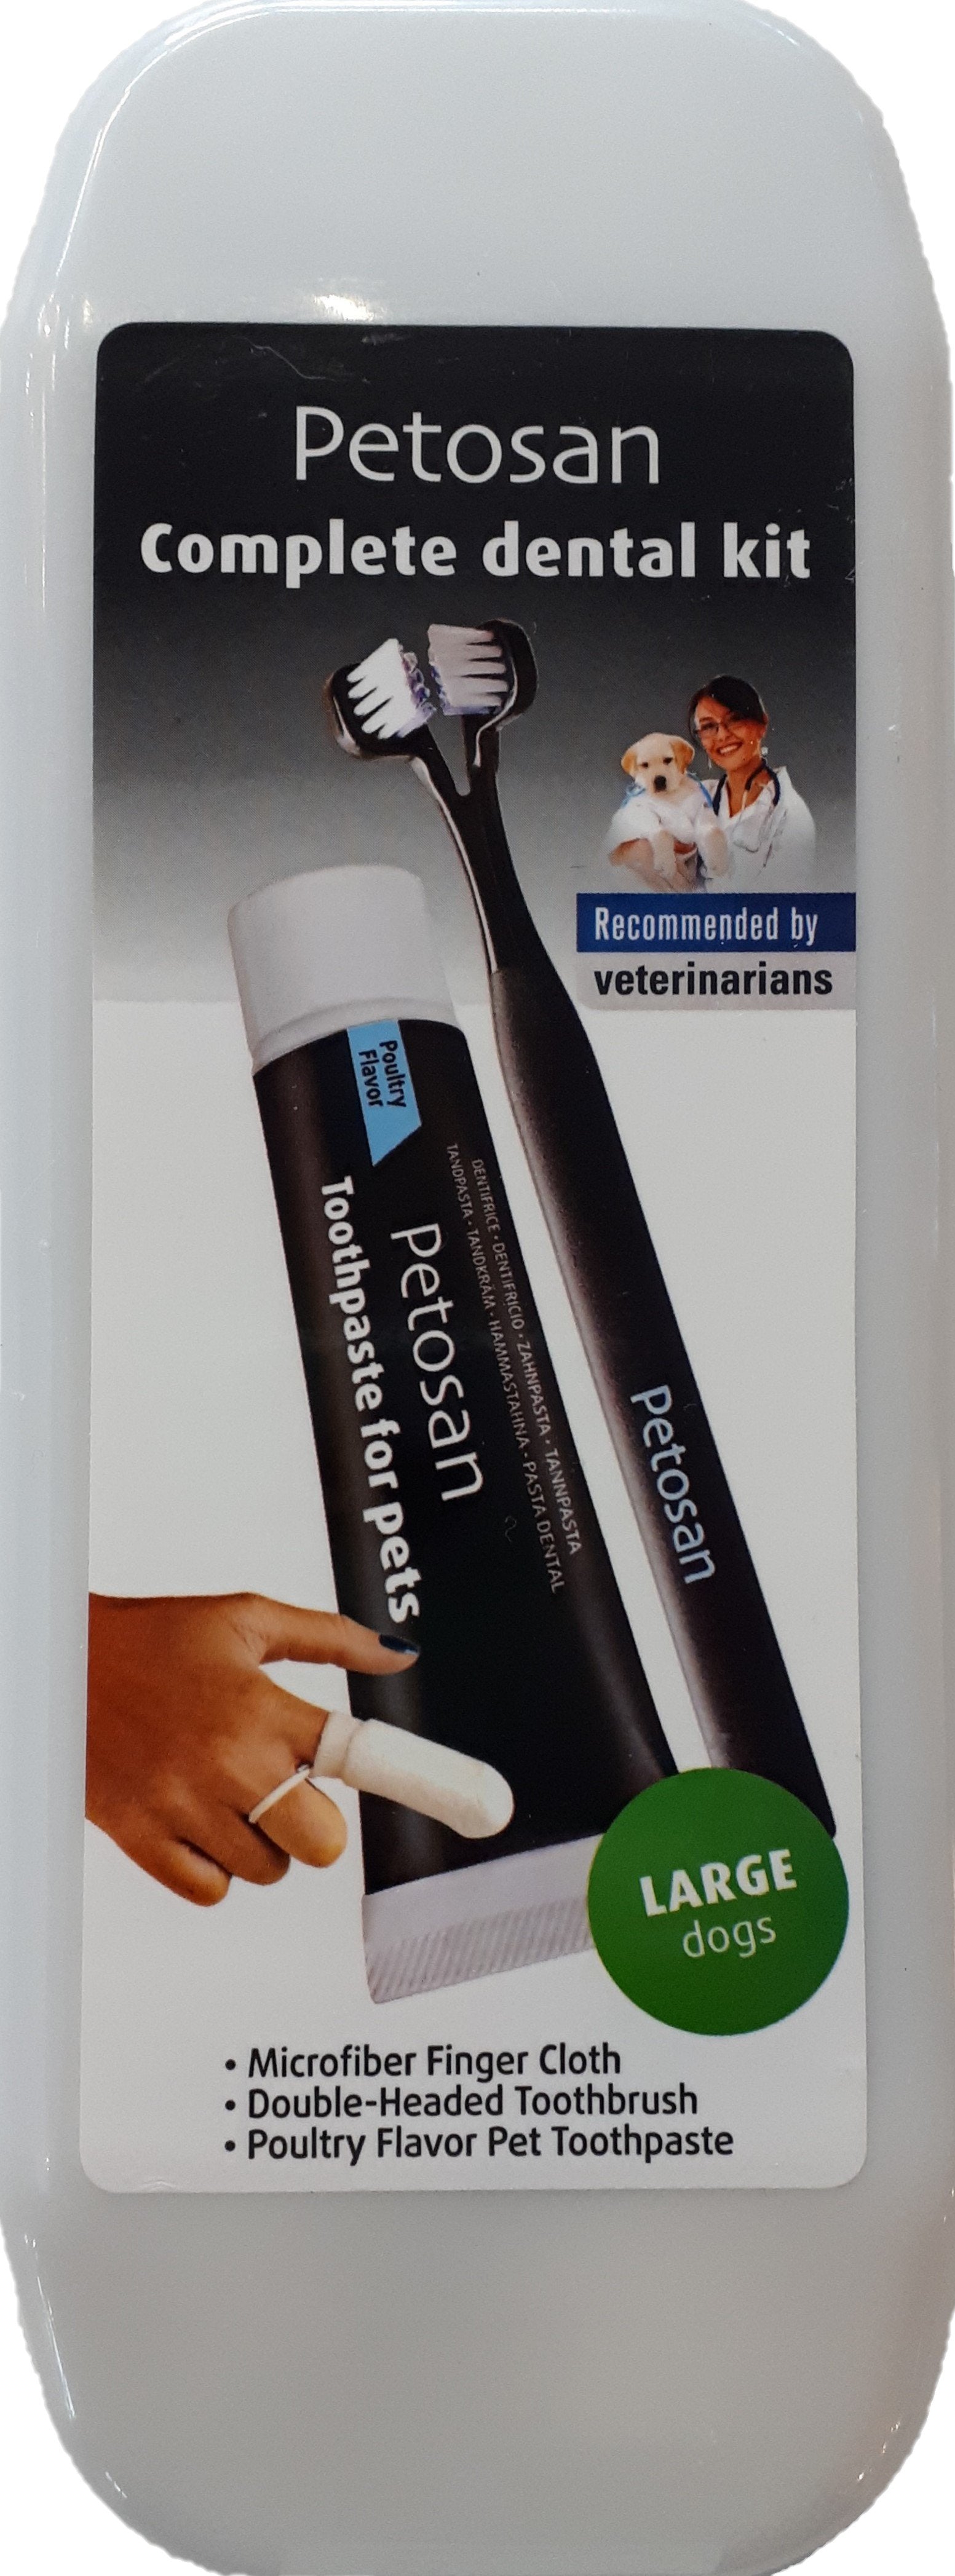 Petosan Complete Dental Kit Large - RSPCA VIC